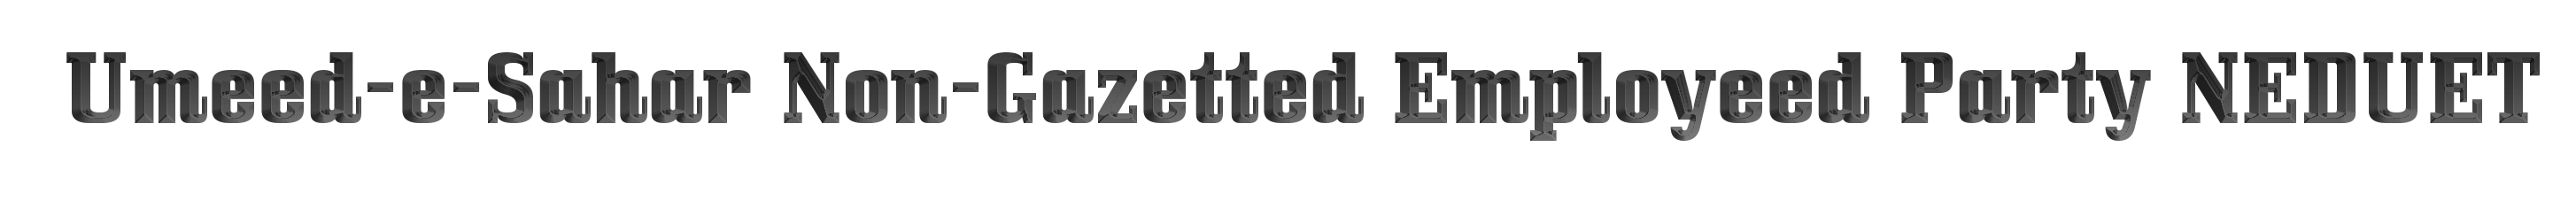 Umeed-e-Sahar Non-Gazetted Employeed Party NEDUET logo. Free logo maker.